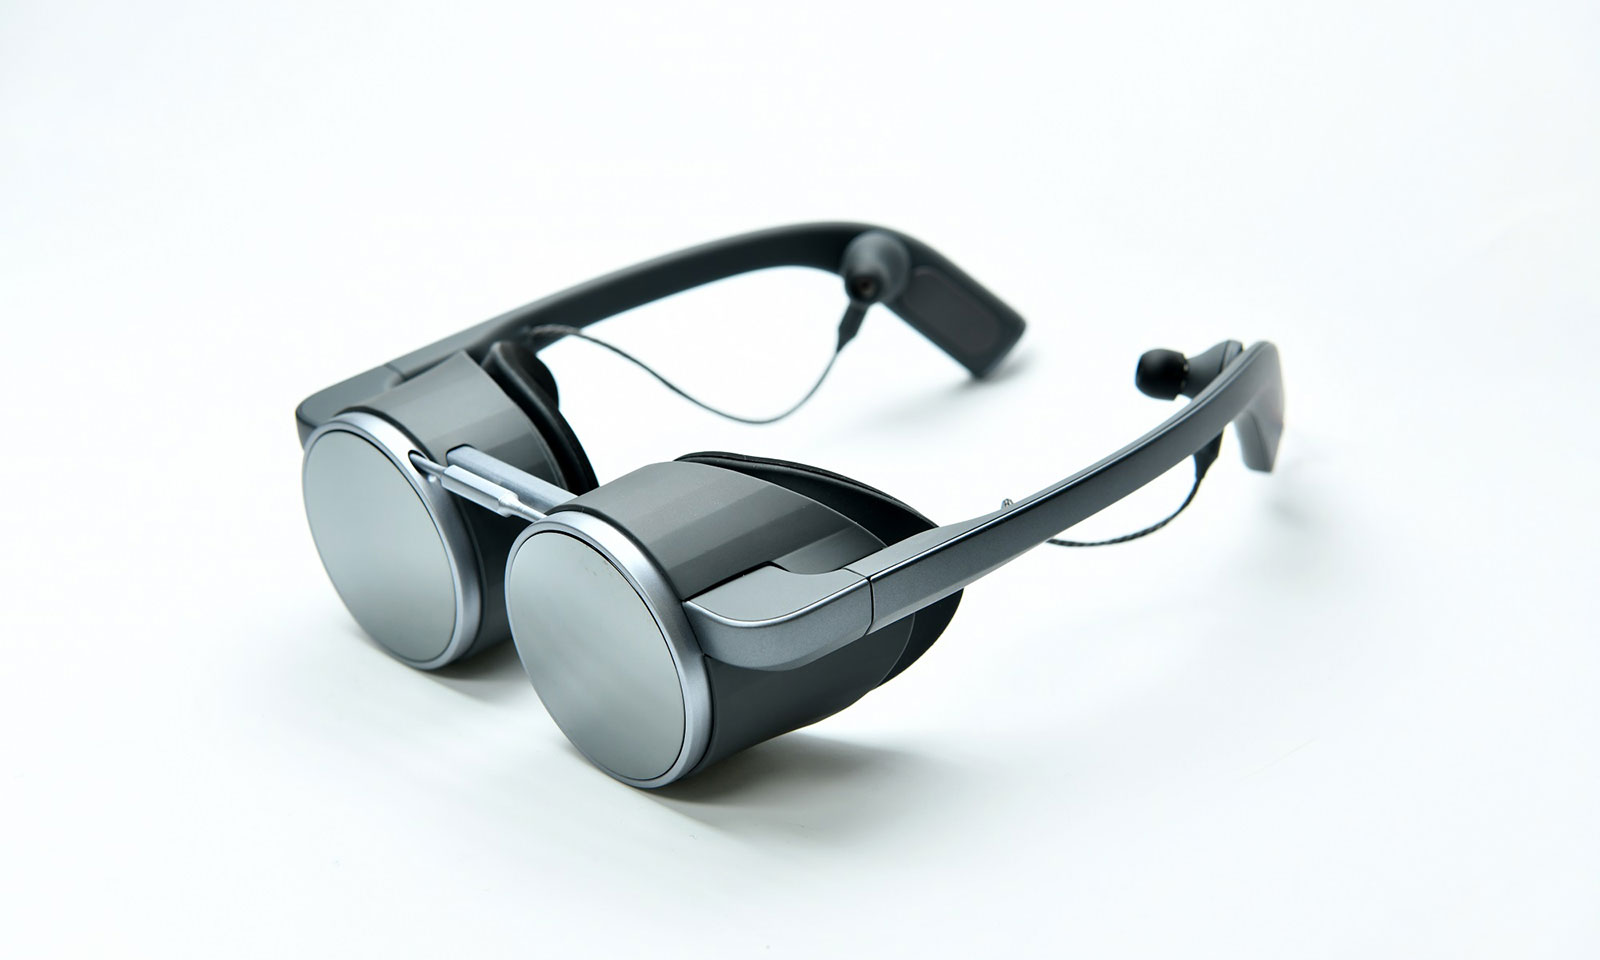 Ochelarii VR HDR de la Panasonic